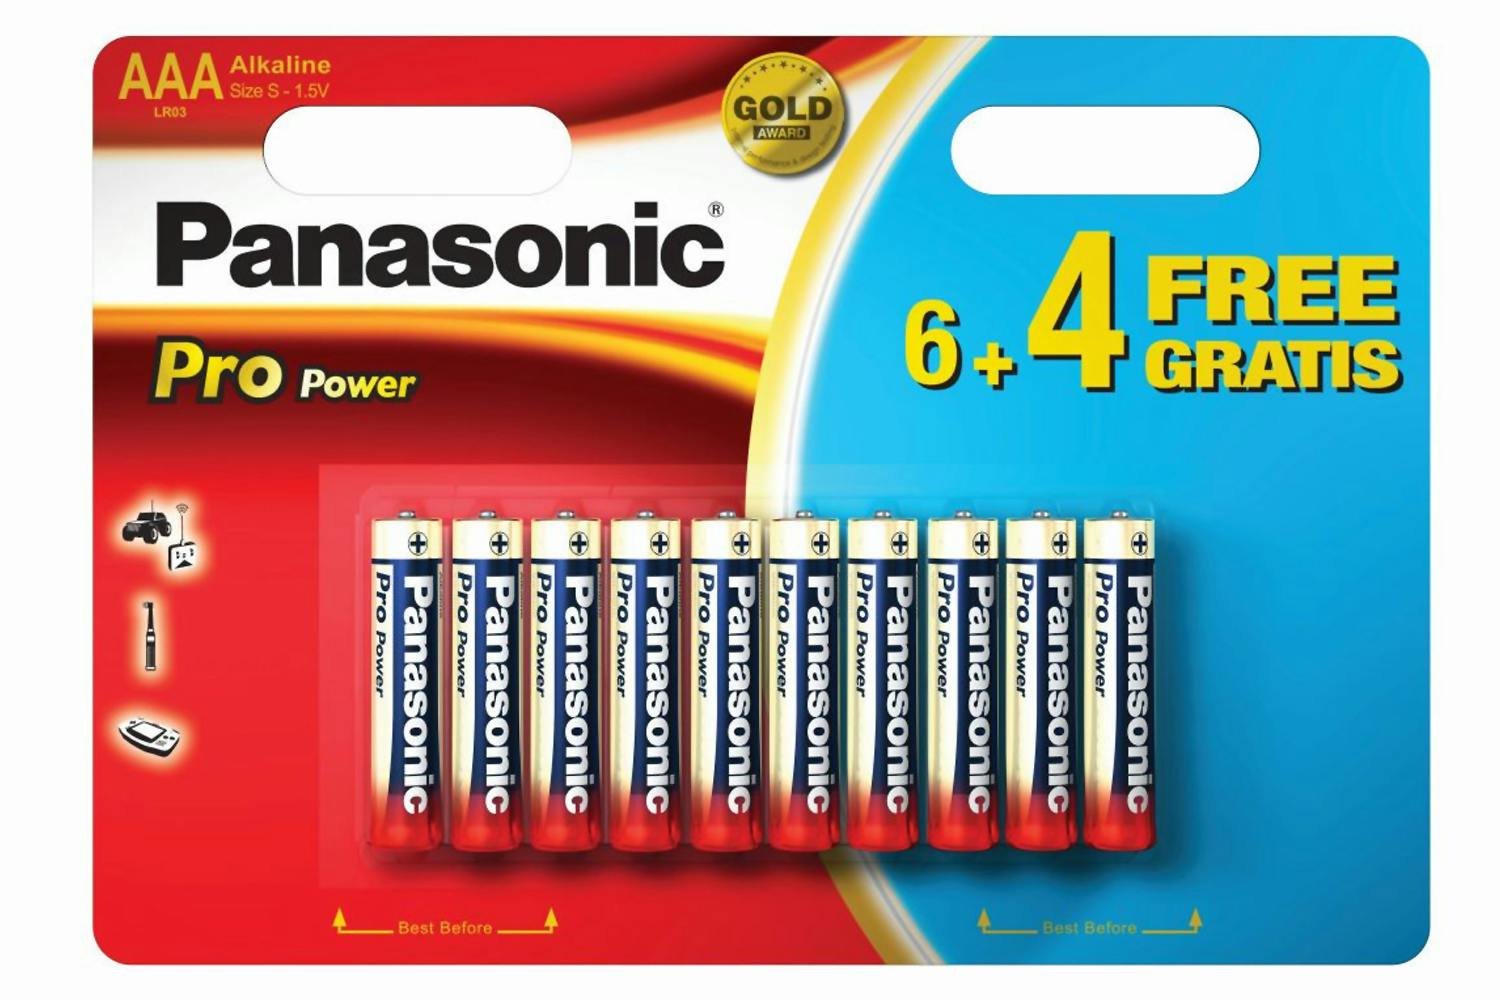 Panasonic Pro Power AAA Alkaline Batteries 1.5V | PPGLR03